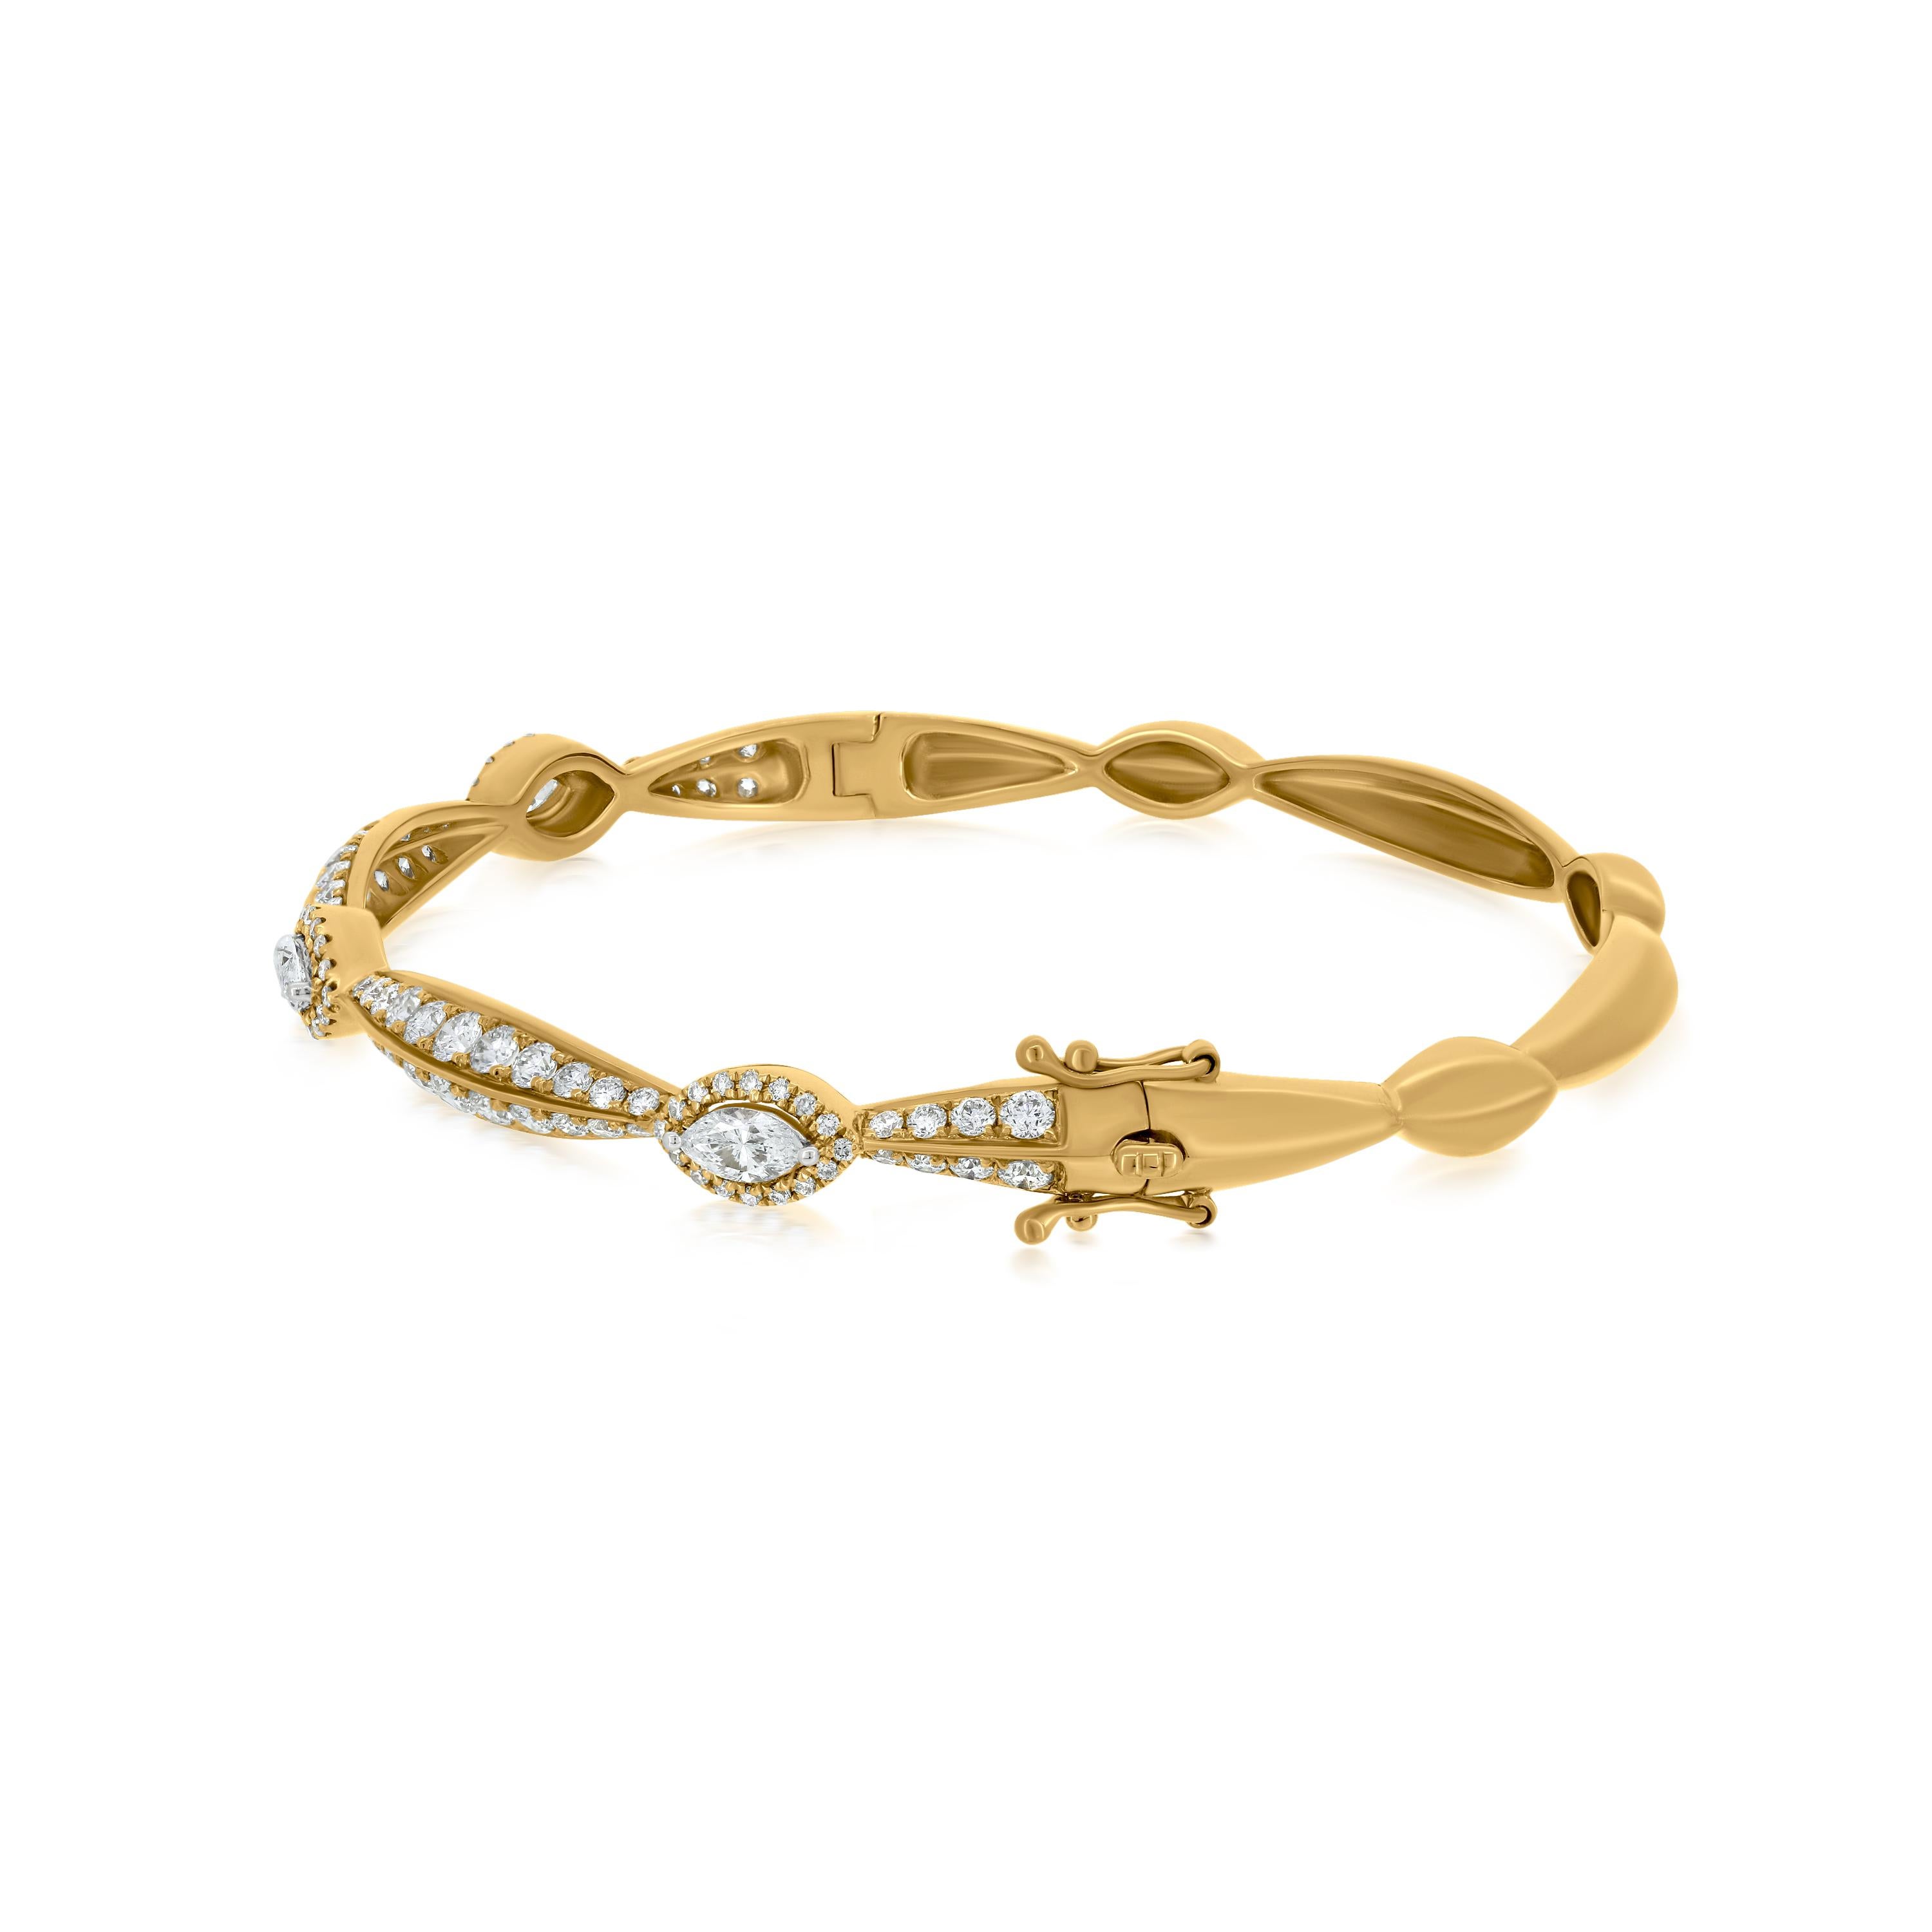 Contemporary Nigaam 2.54cttw. Diamond Bridal Wear Bangle Bracelet in 18k Yellow Gold